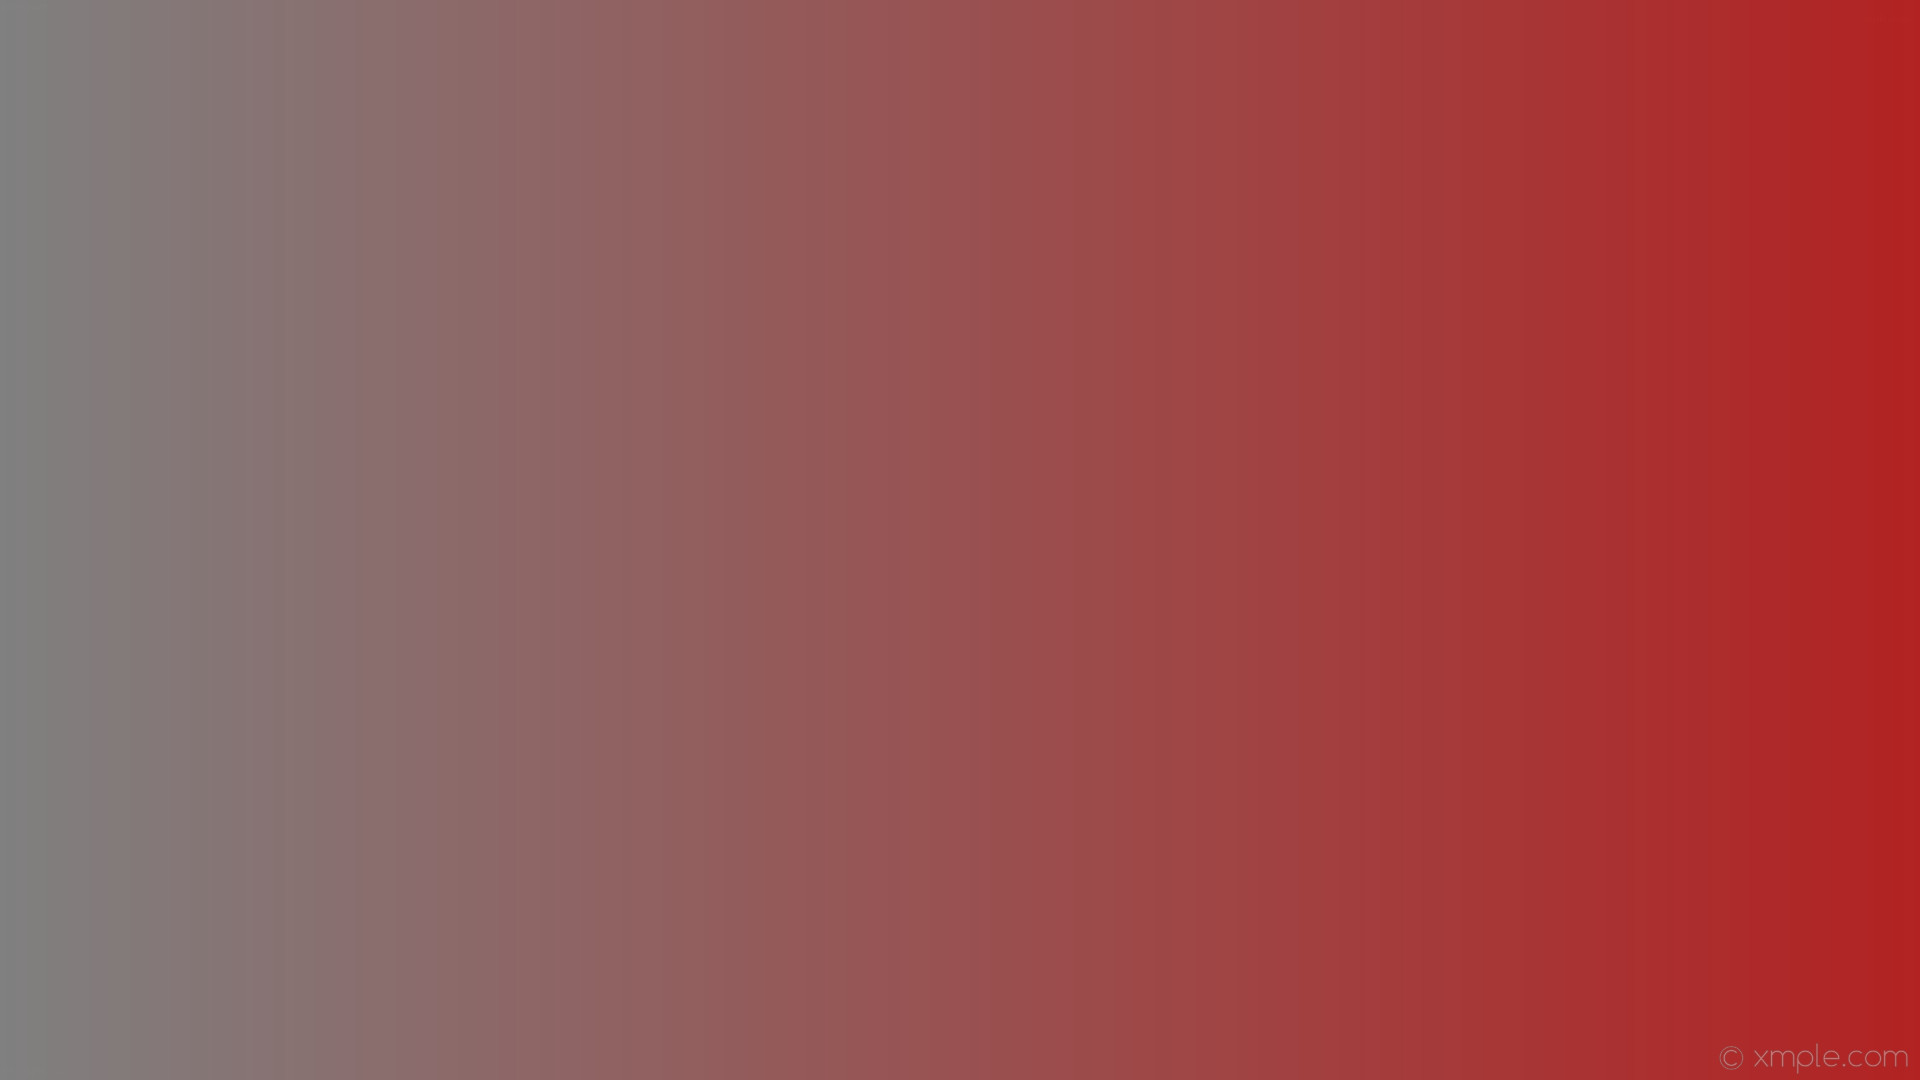 1920x1080 wallpaper gradient grey red linear gray fire brick #808080 #b22222 180Â°